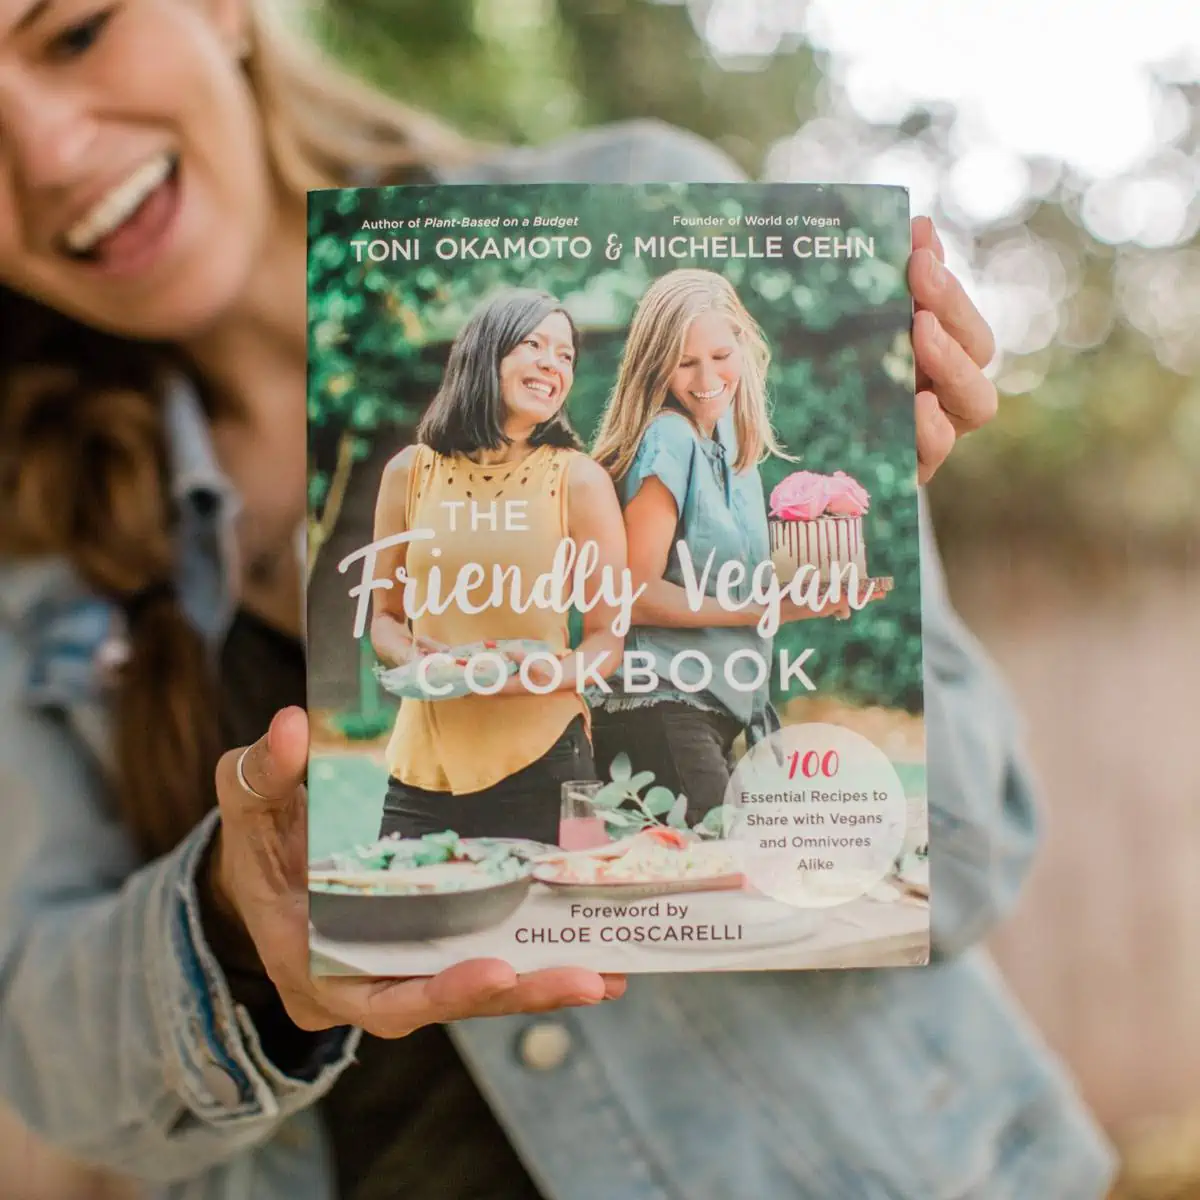 The Friendly Vegan Cookbook Cover